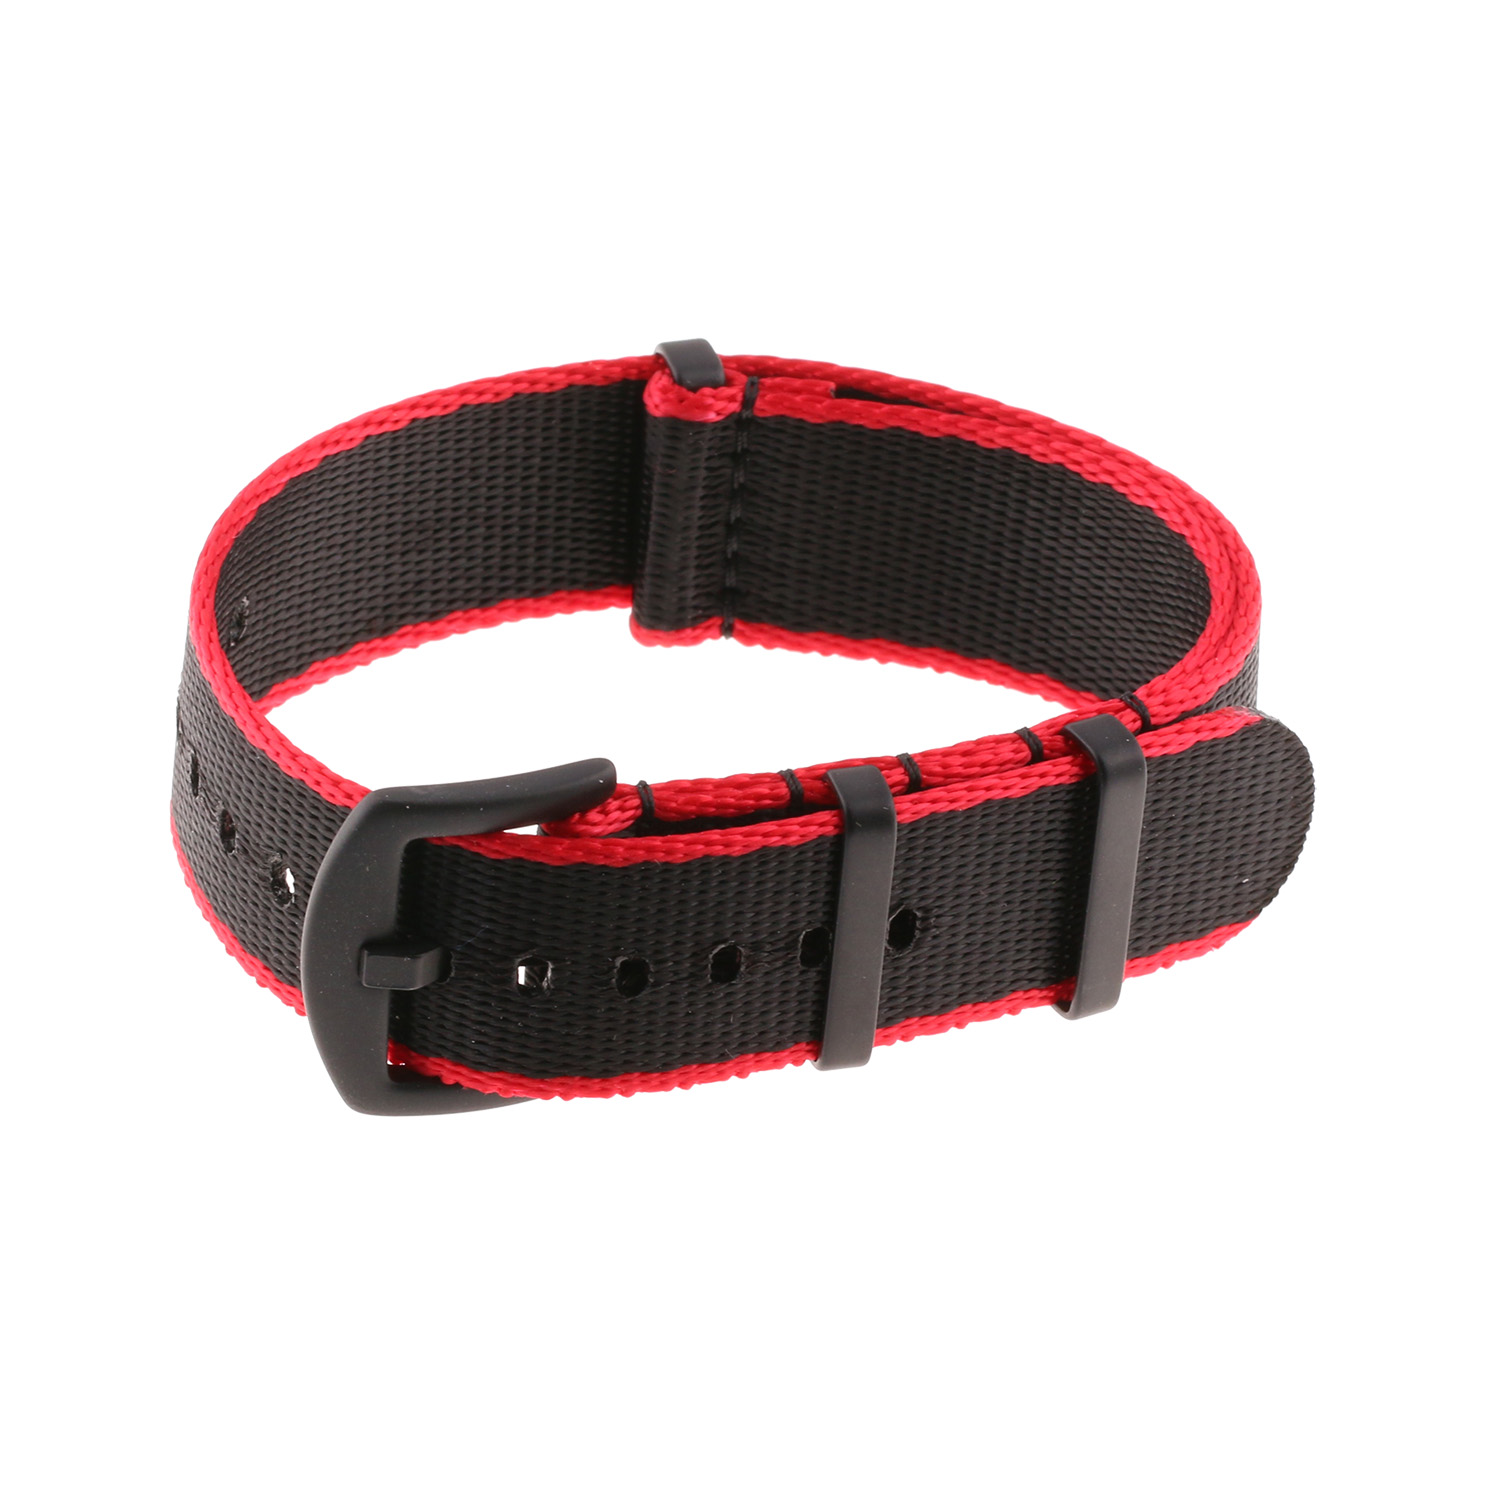 Nt4.nl.6.1.mb Main Red & Black StrapsCo Premium Woven Nylon Seatbelt NATO Watch Band Strap With Black Buckle 18mm 20mm 22mm 24mm